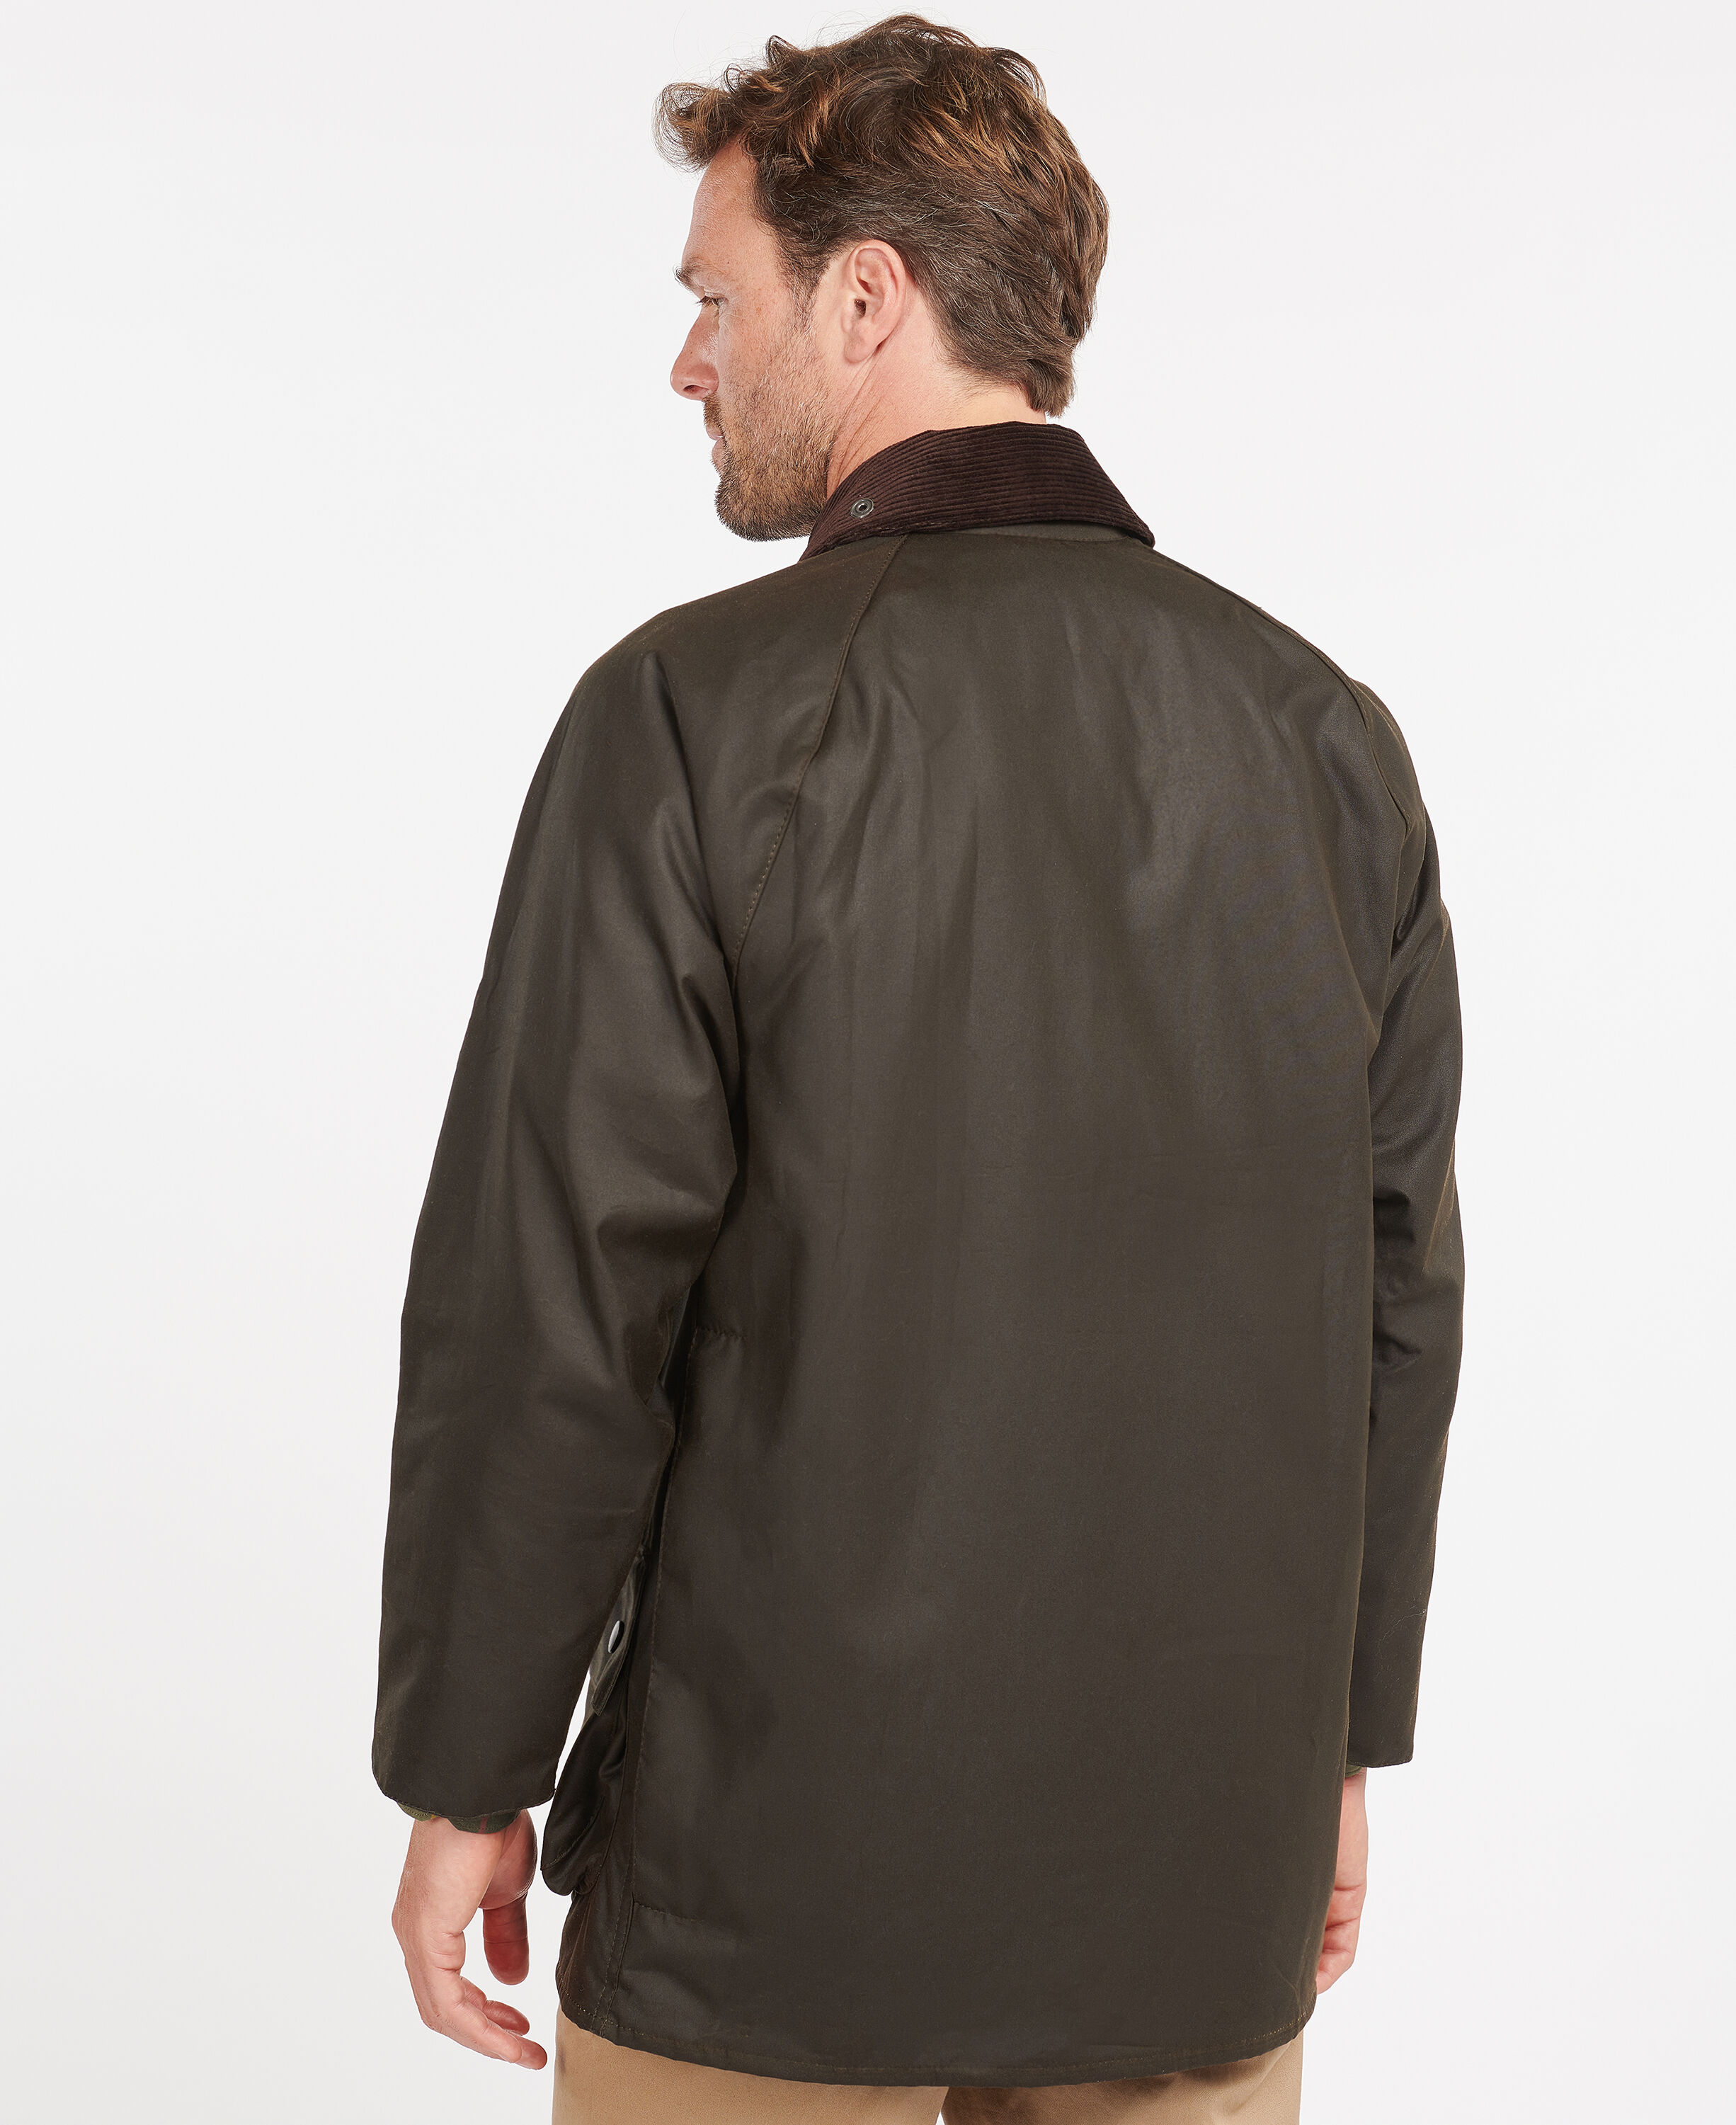 Barbour classic beaufort wax jacket olive - size 38